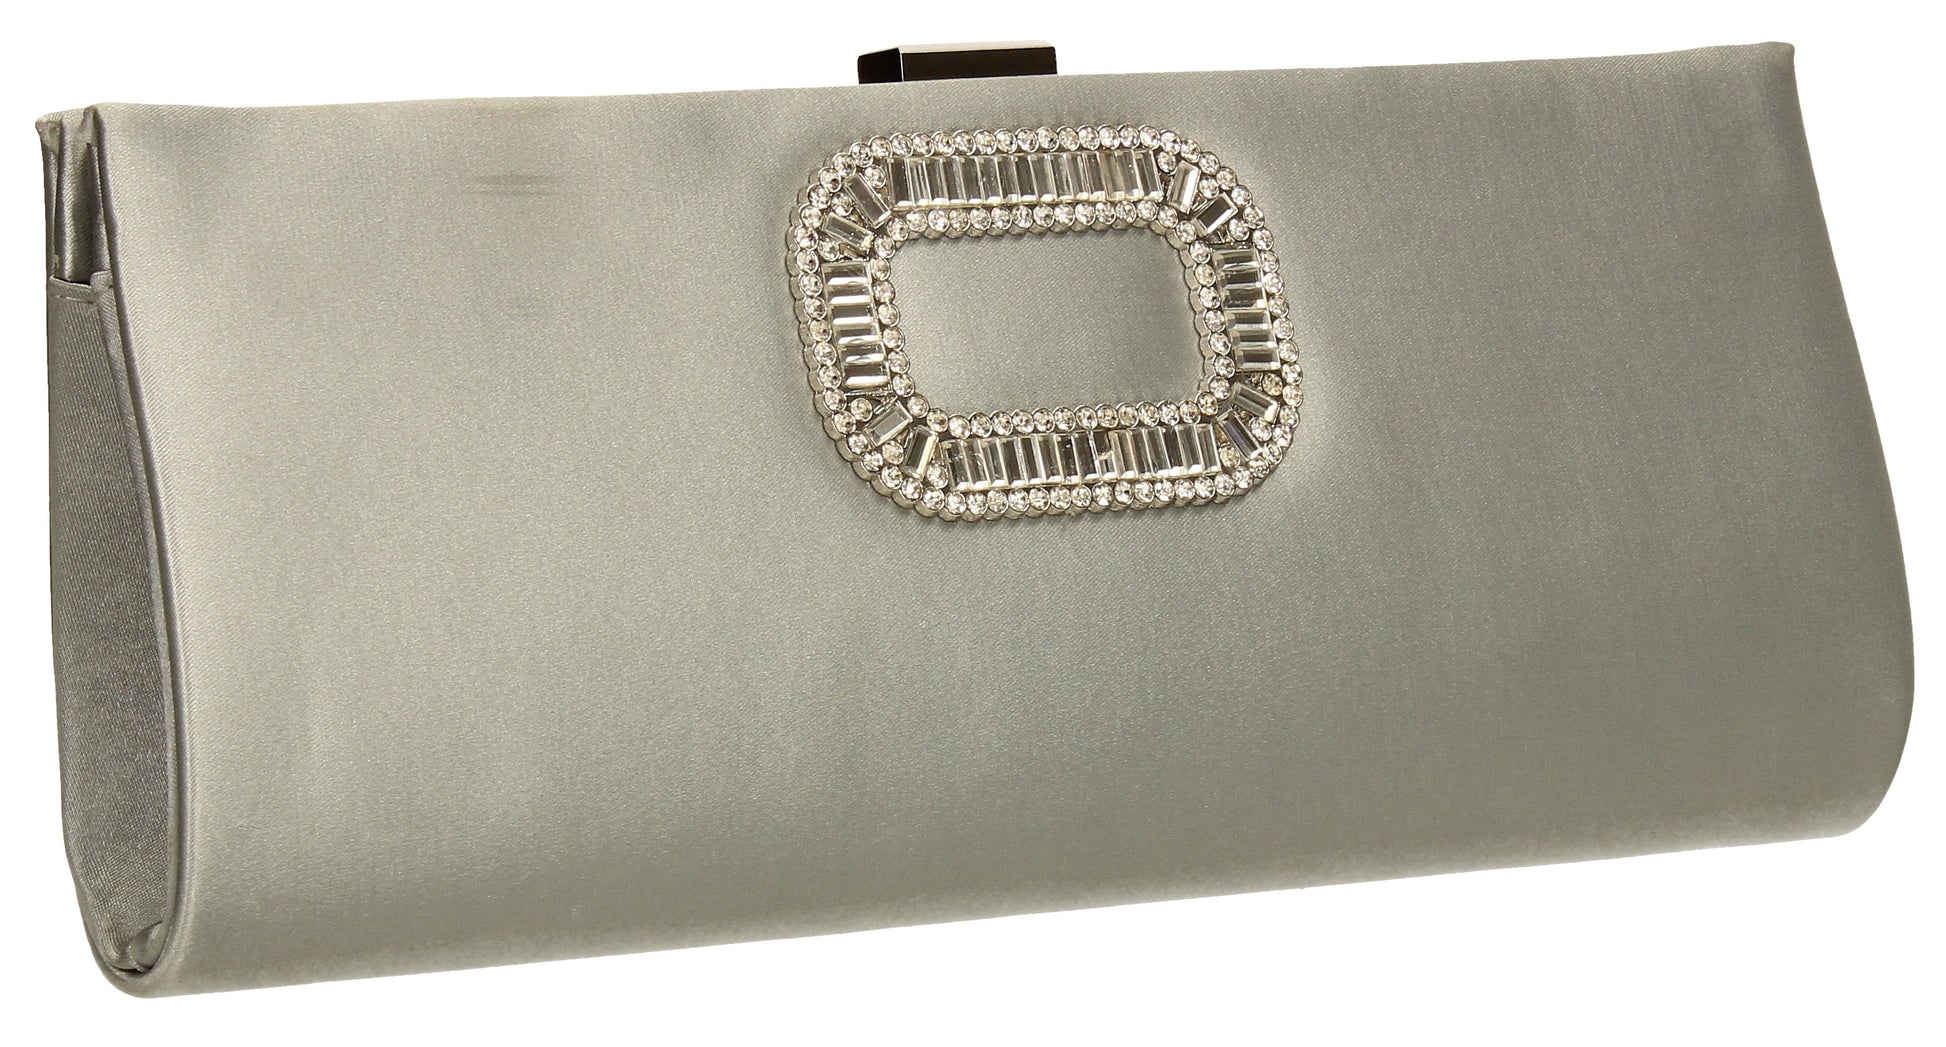 SWANKYSWANS Kerr Satin Clutch Bag Silver Cute Cheap Clutch Bag For Weddings School and Work